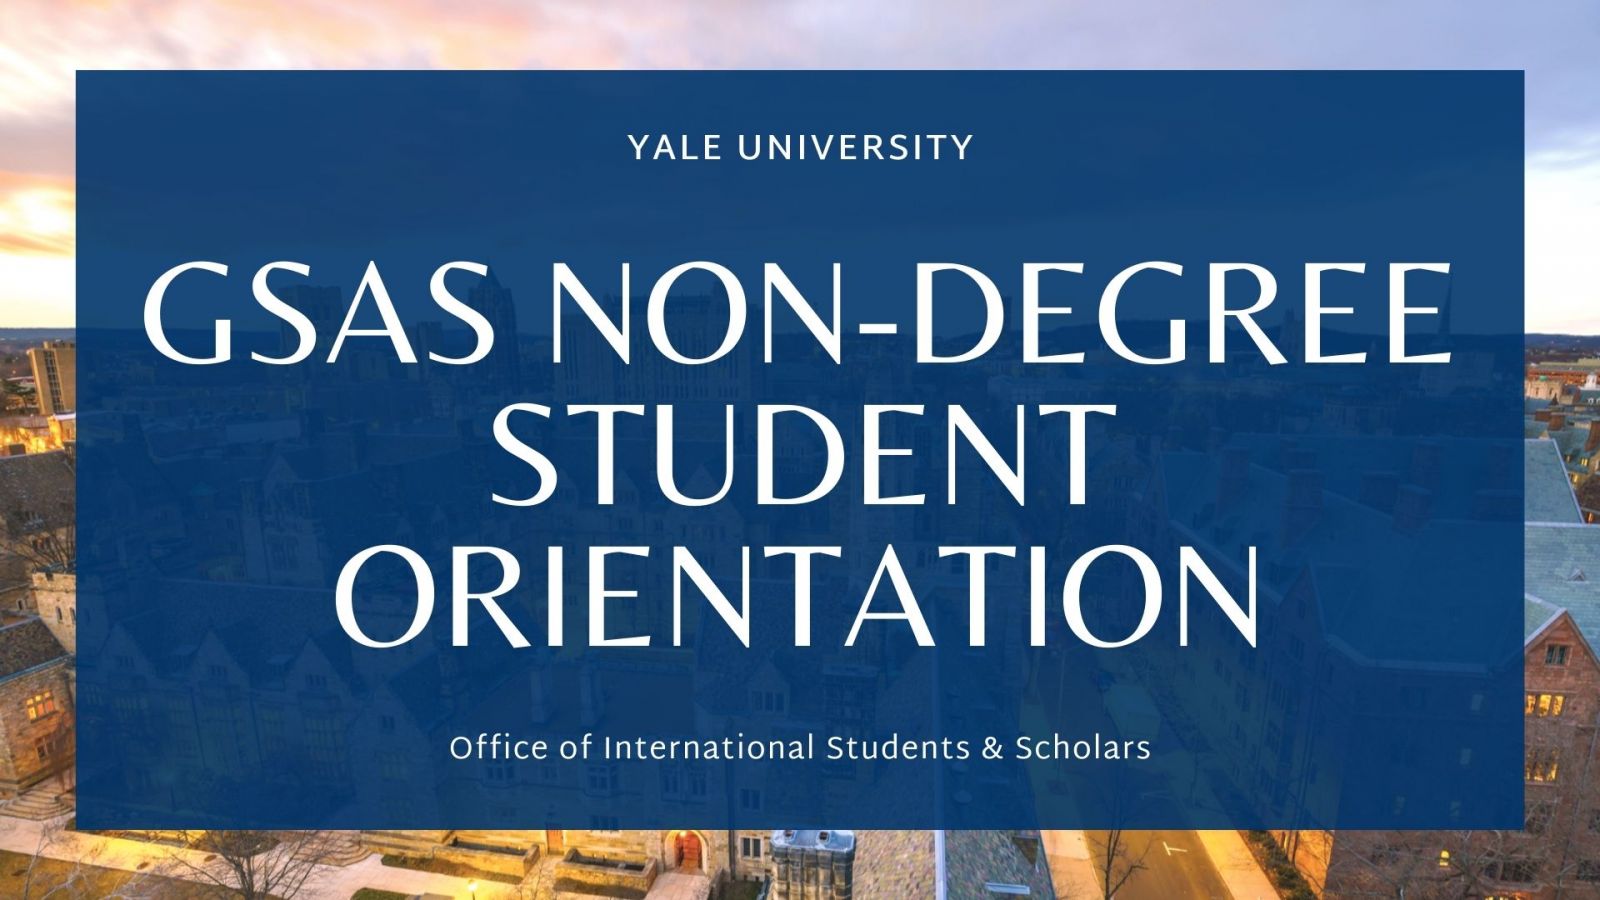 Orientation slides for non-degree students